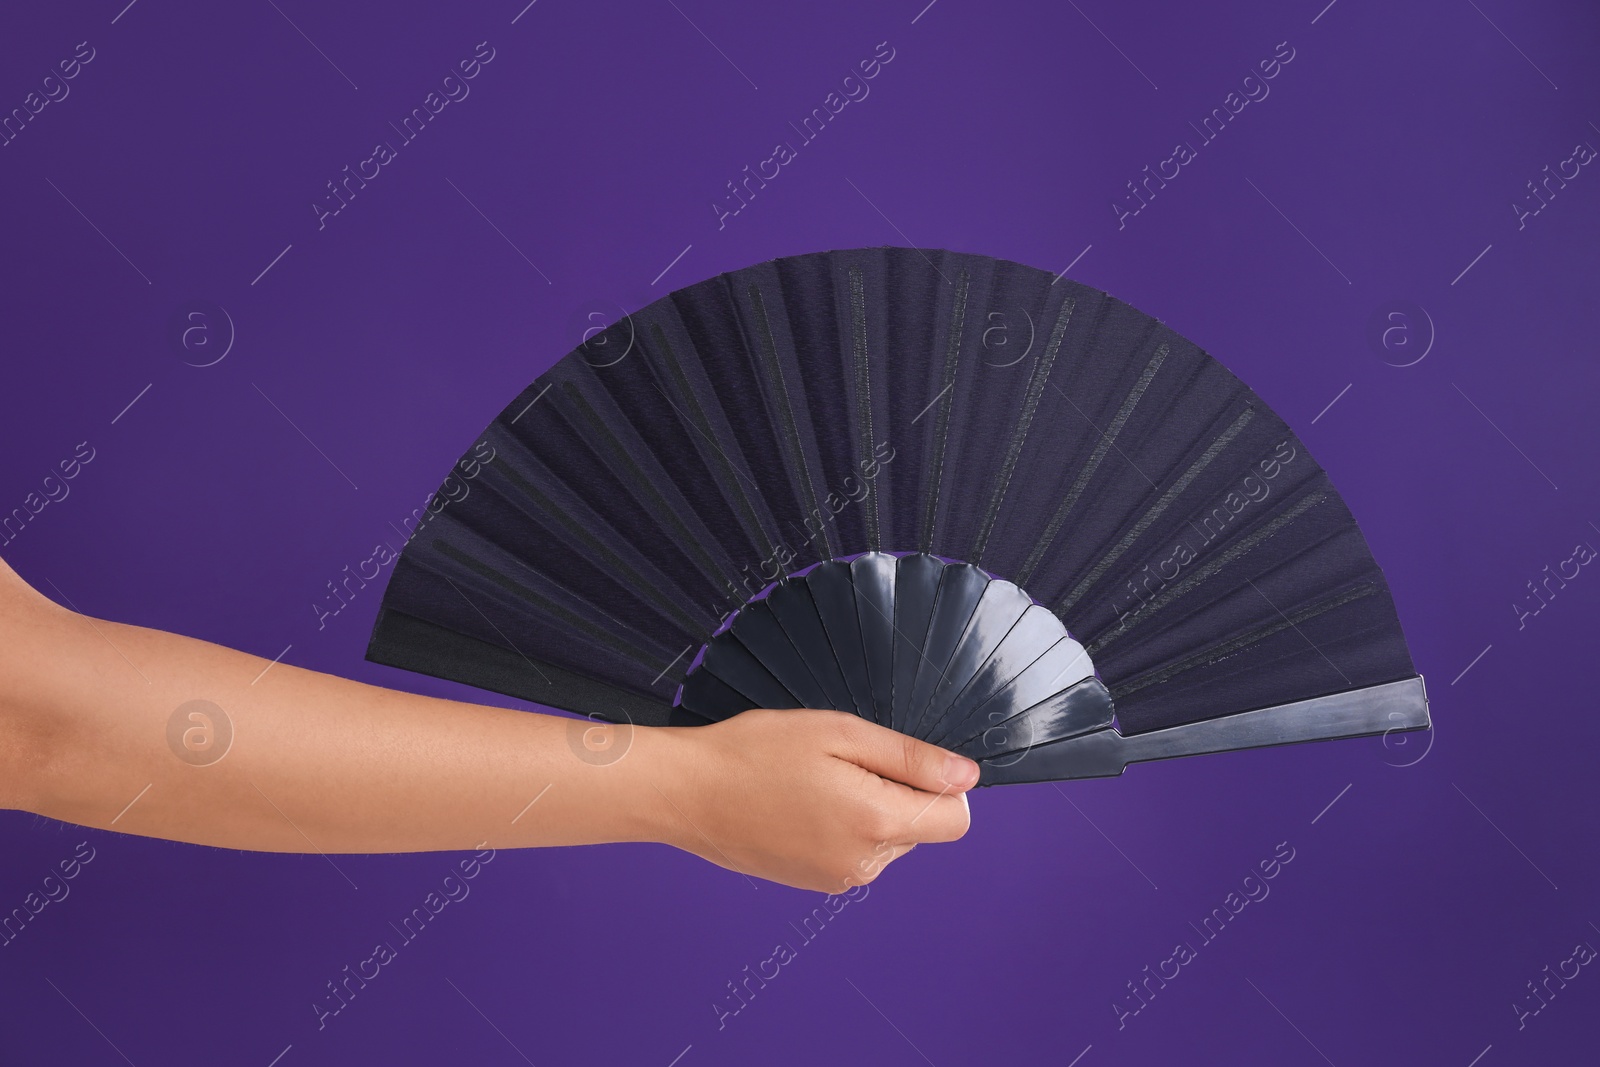 Photo of Woman holding black hand fan on purple background, closeup